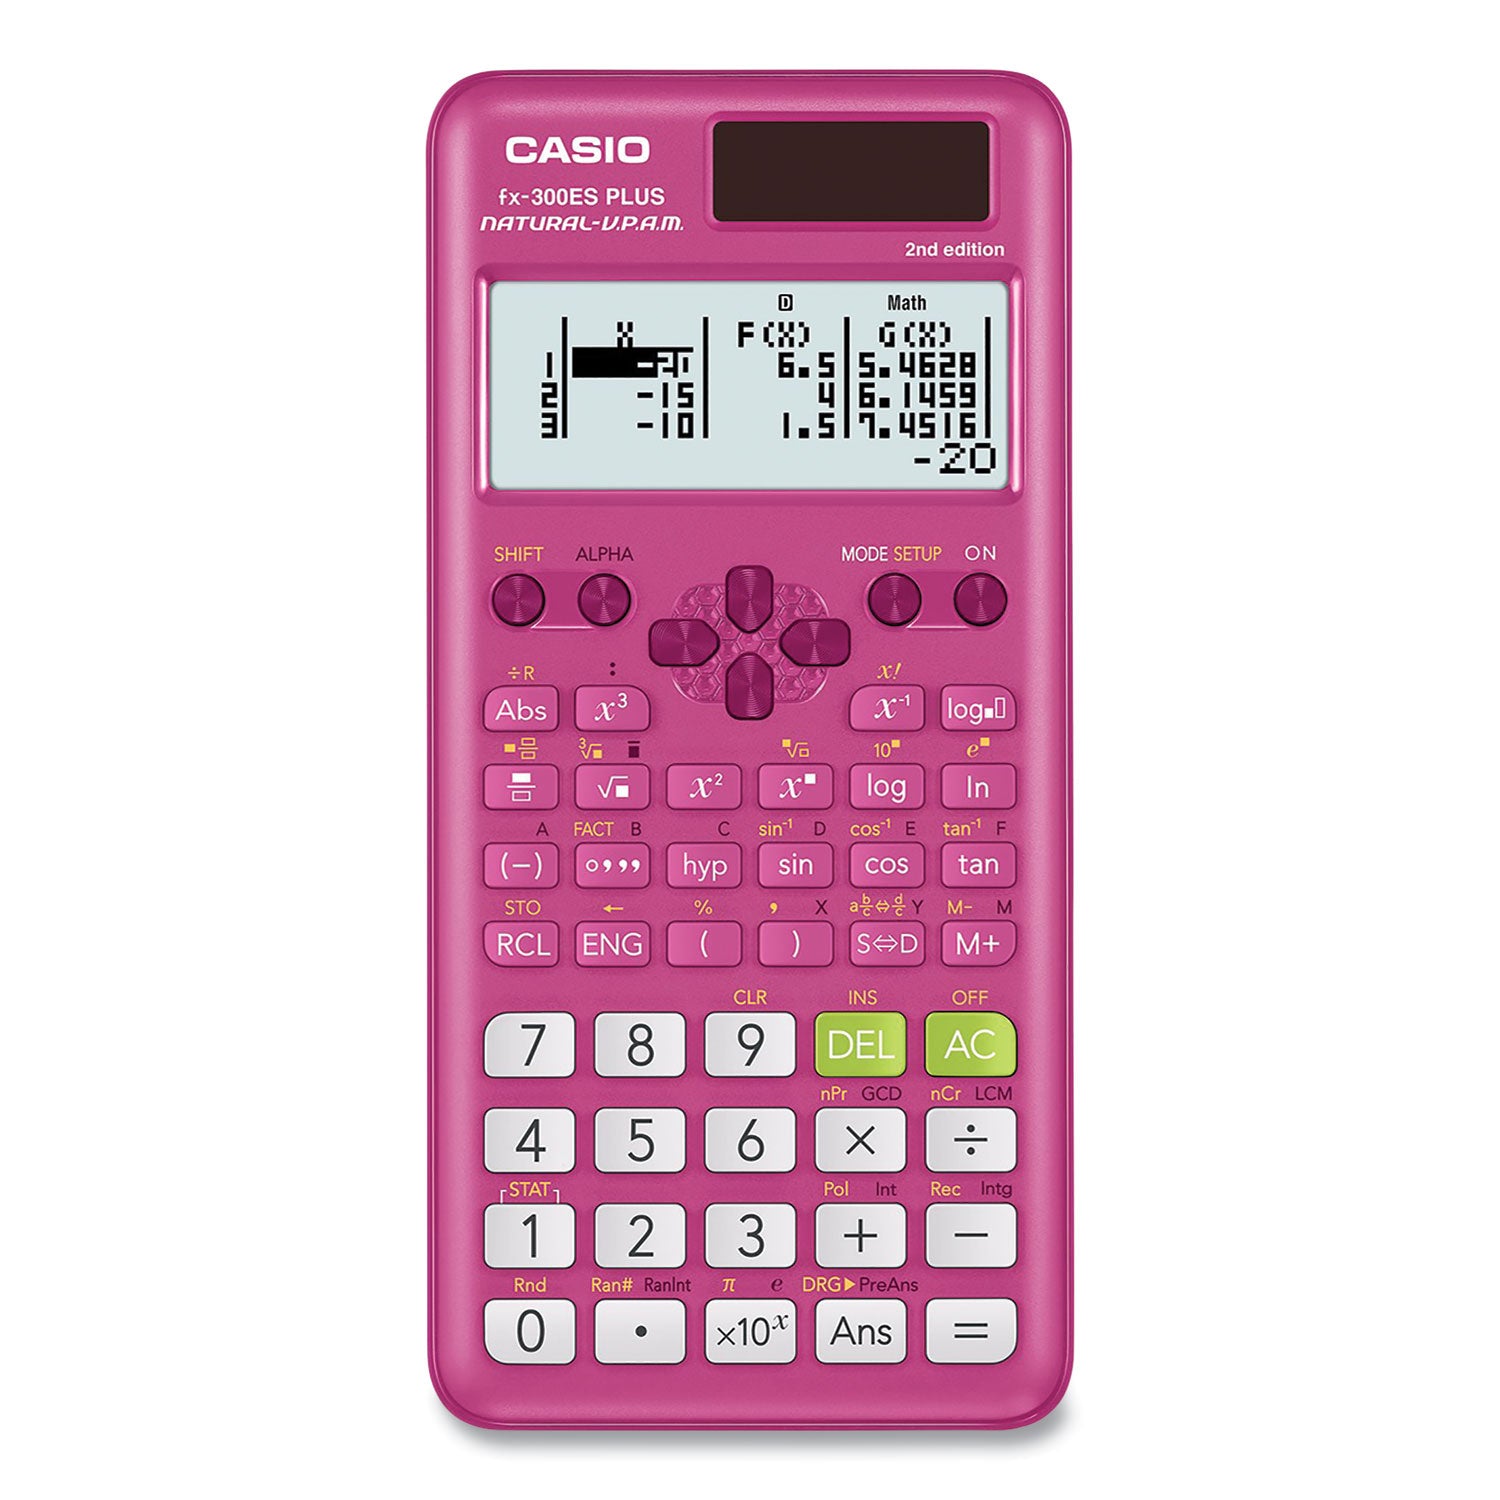 fx-300es-plus-2nd-edition-scientific-calculator-16-digit-lcd-pink_cso300espls2pk - 2